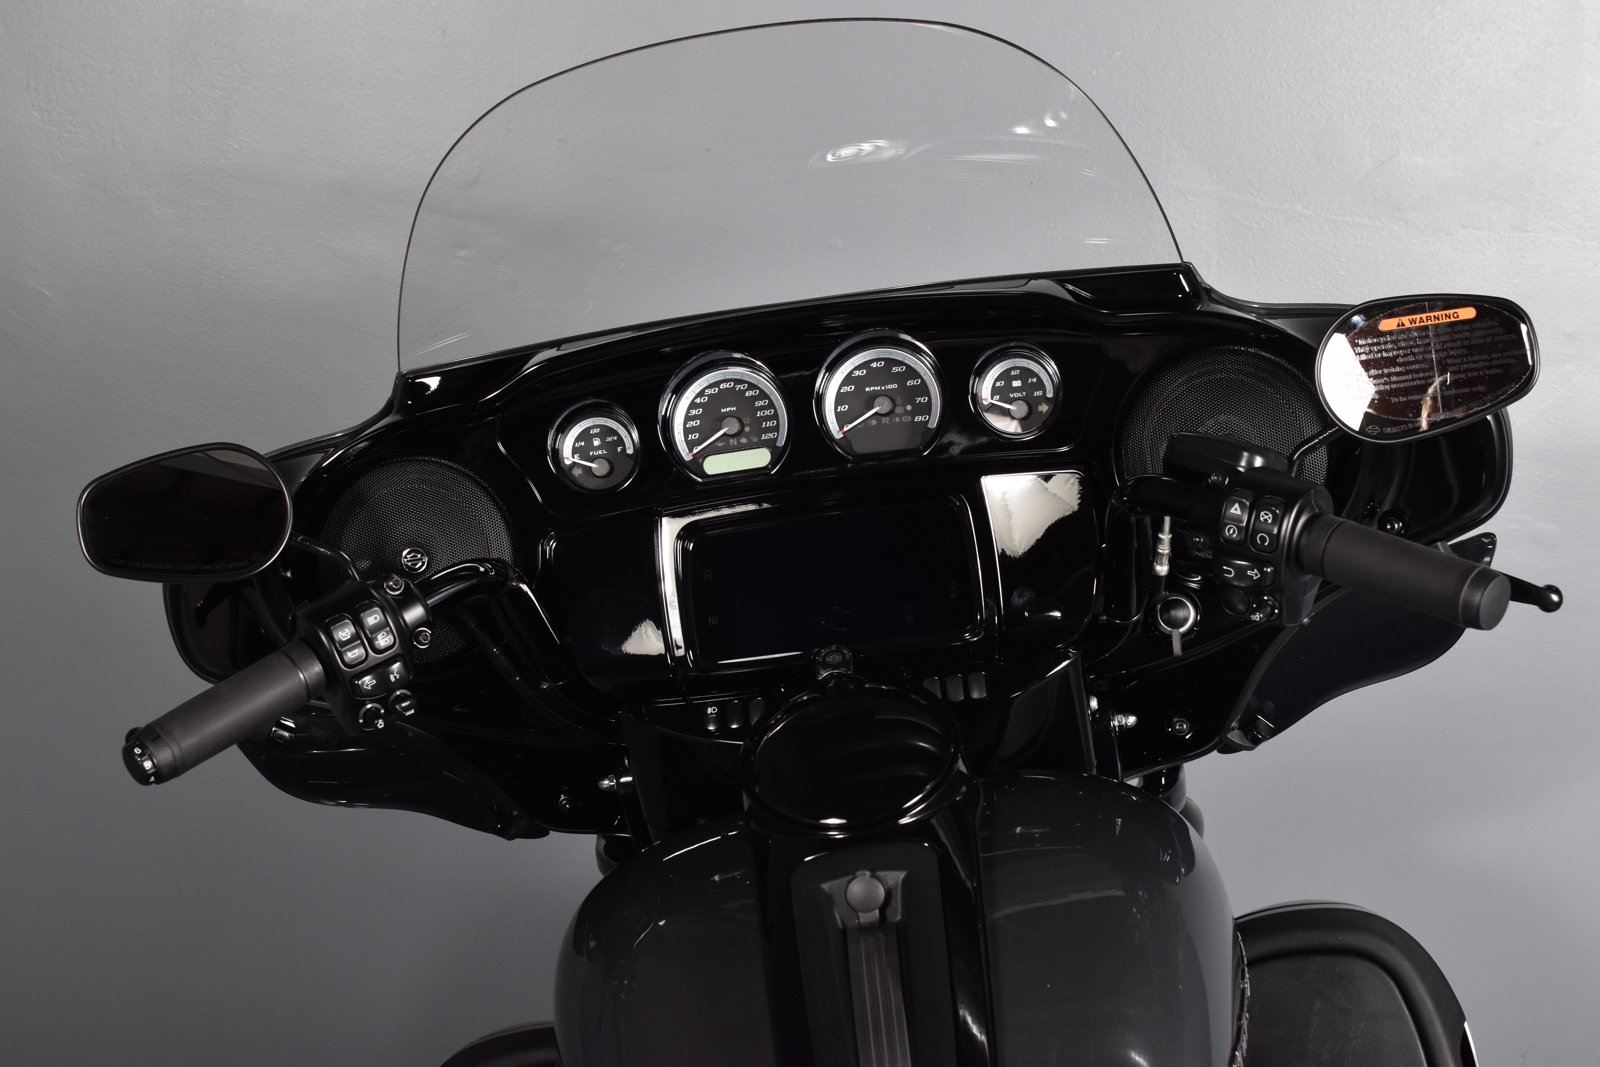 New 2021 Harley Davidson Ultra Limited Black Flhtk Touring 1